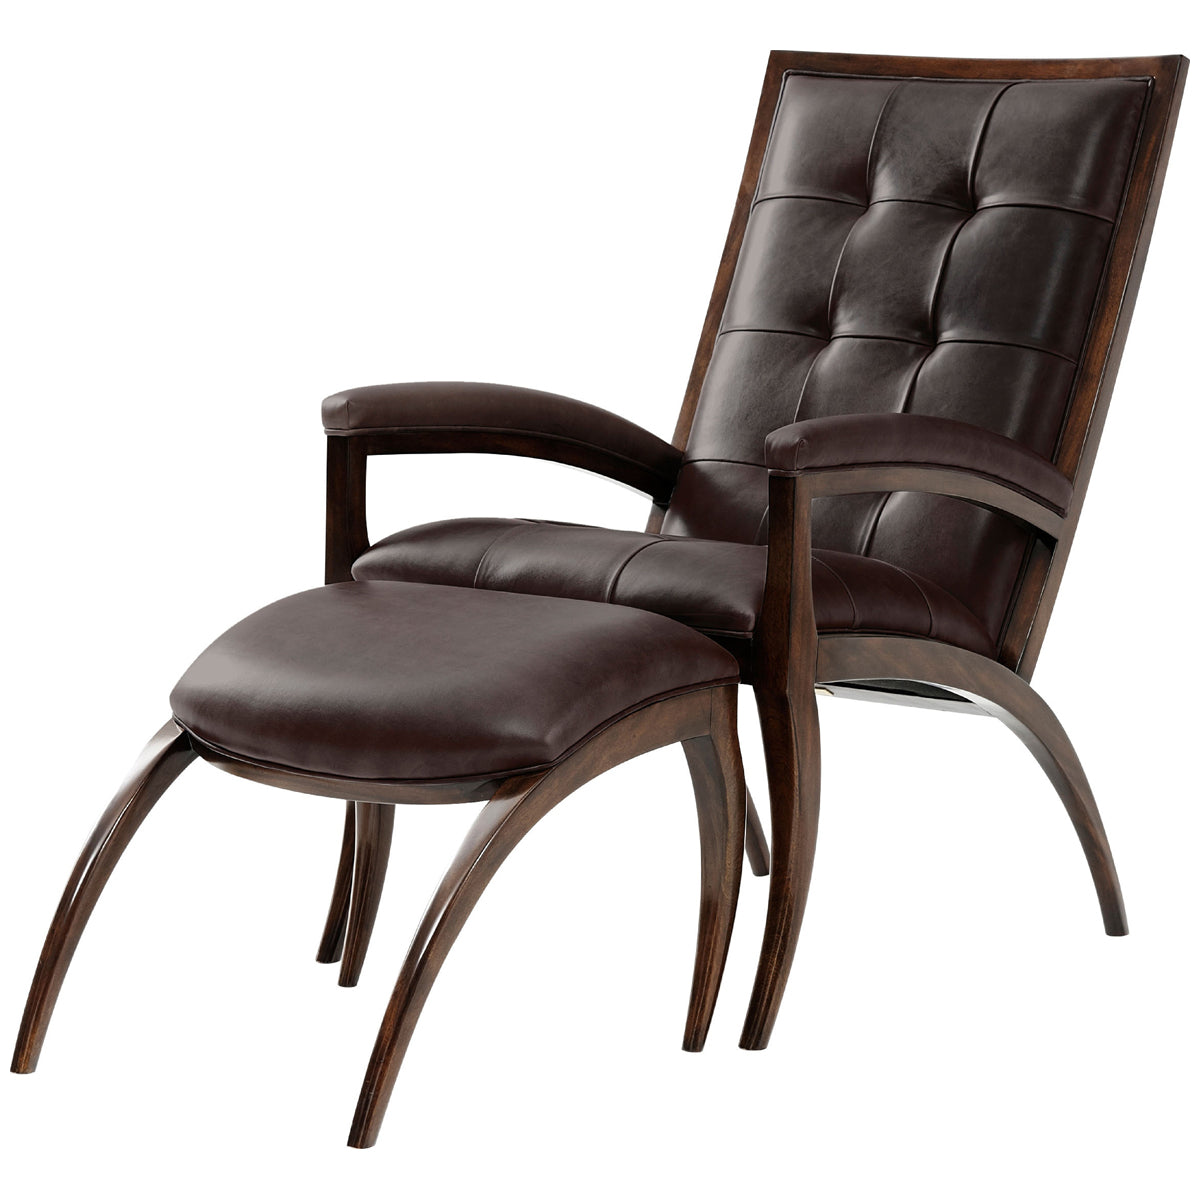 Theodore Alexander Arc Chair & Ottoman